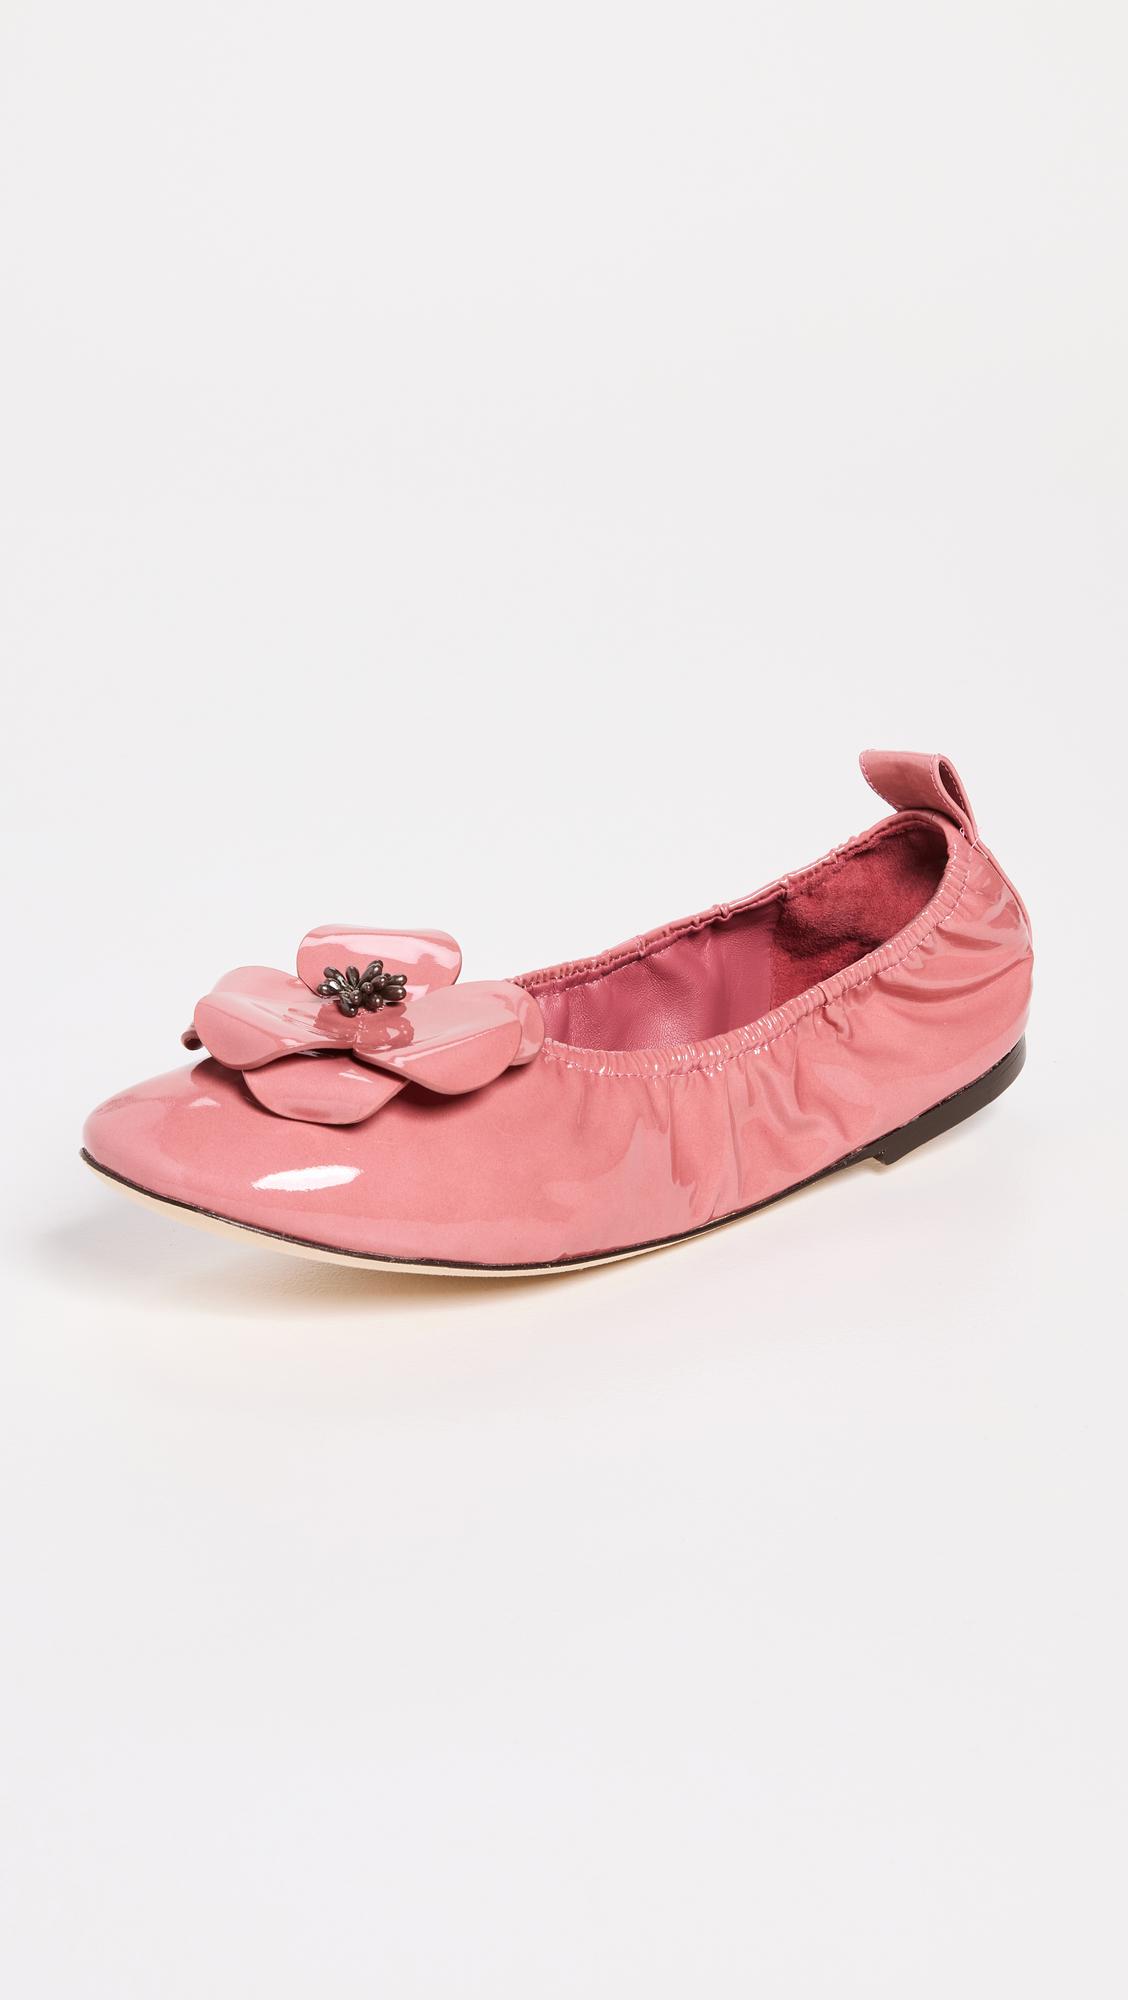 Tory Burch Flower Ballet Flats in Pink | Lyst